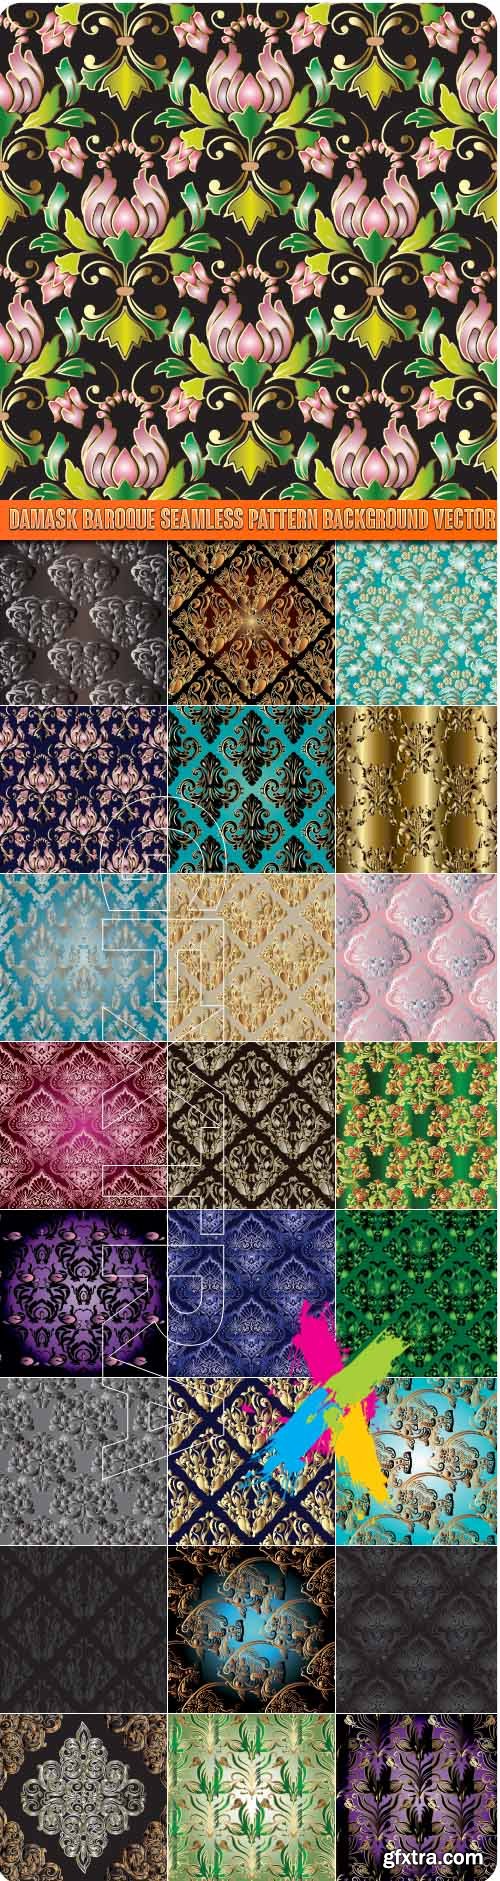 Damask baroqure seamless pattern background vector